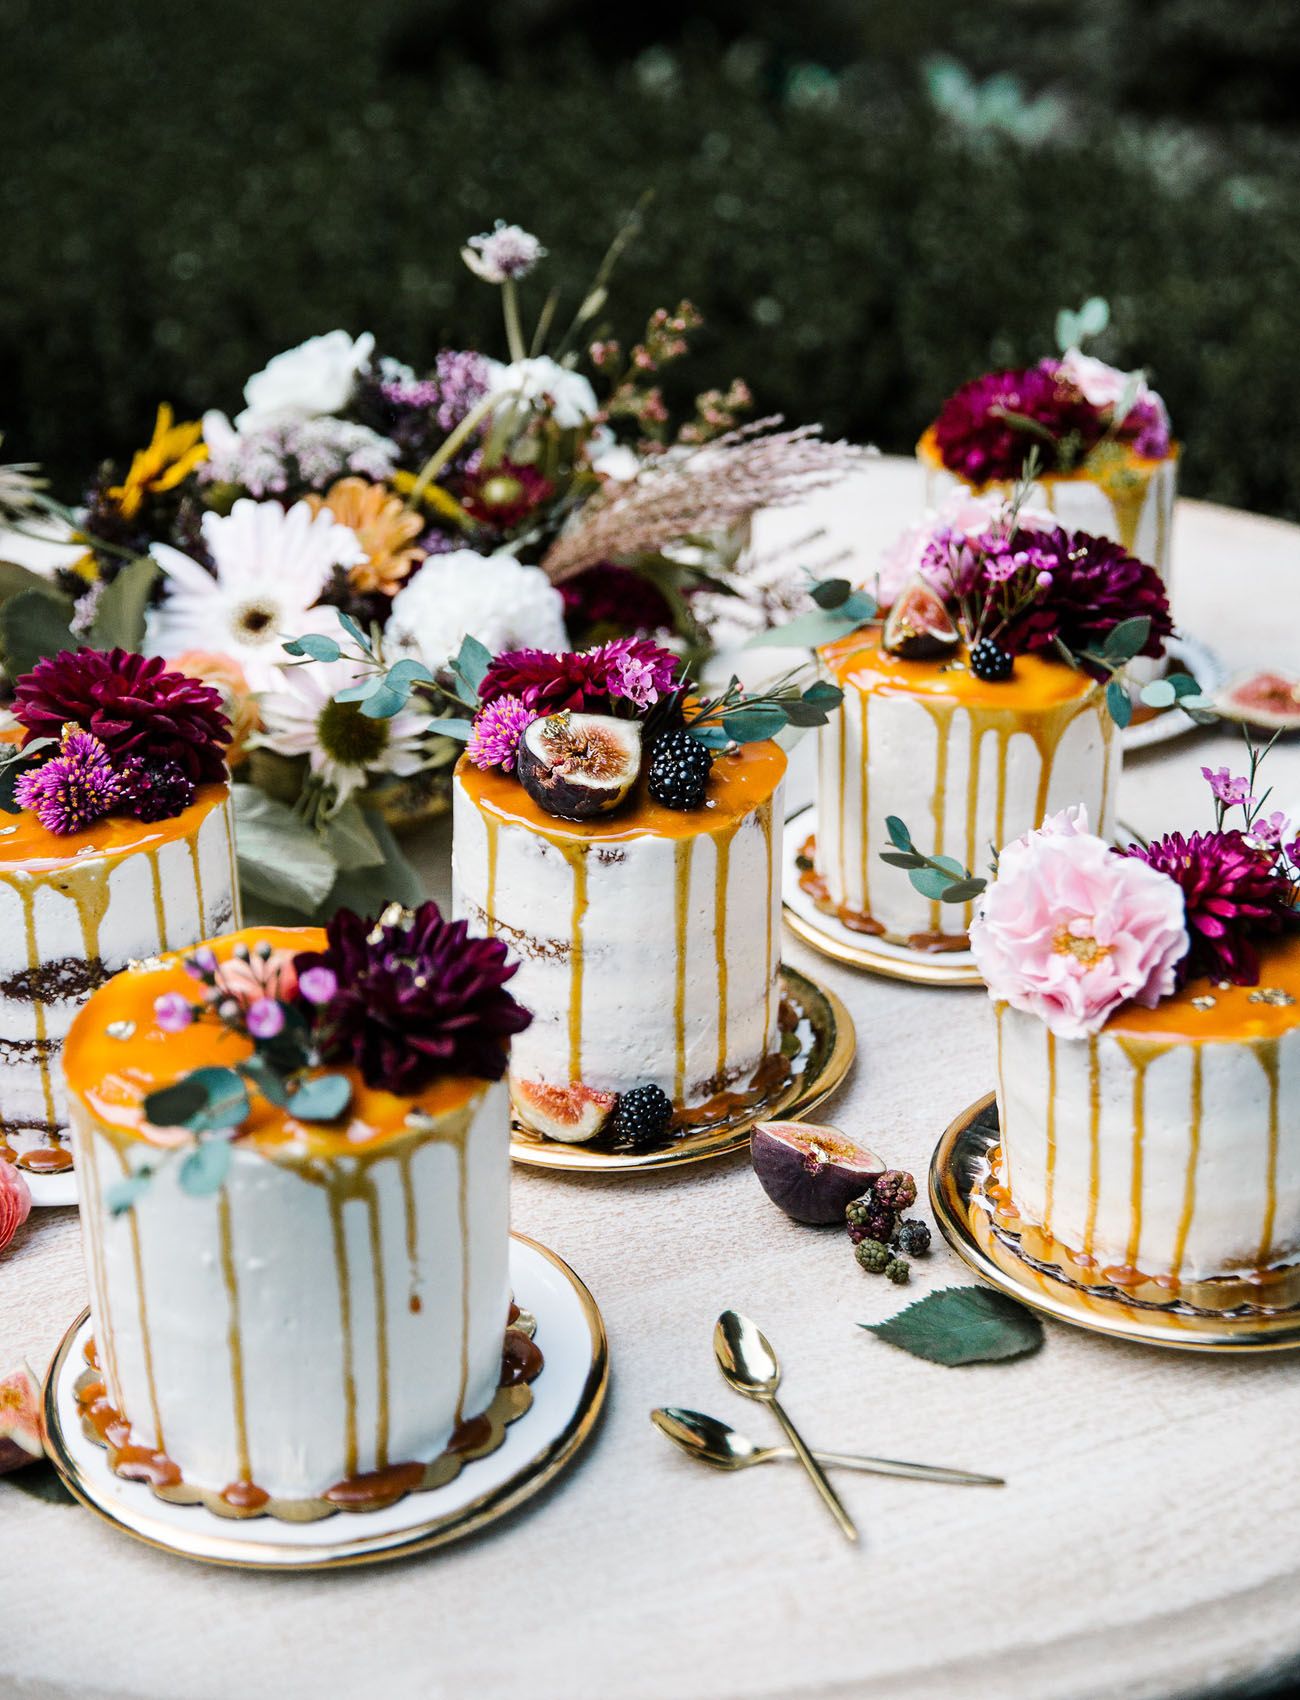 Mini Layer Cakes for Easter | Recipes & Lifestyle | Jennifer Maune